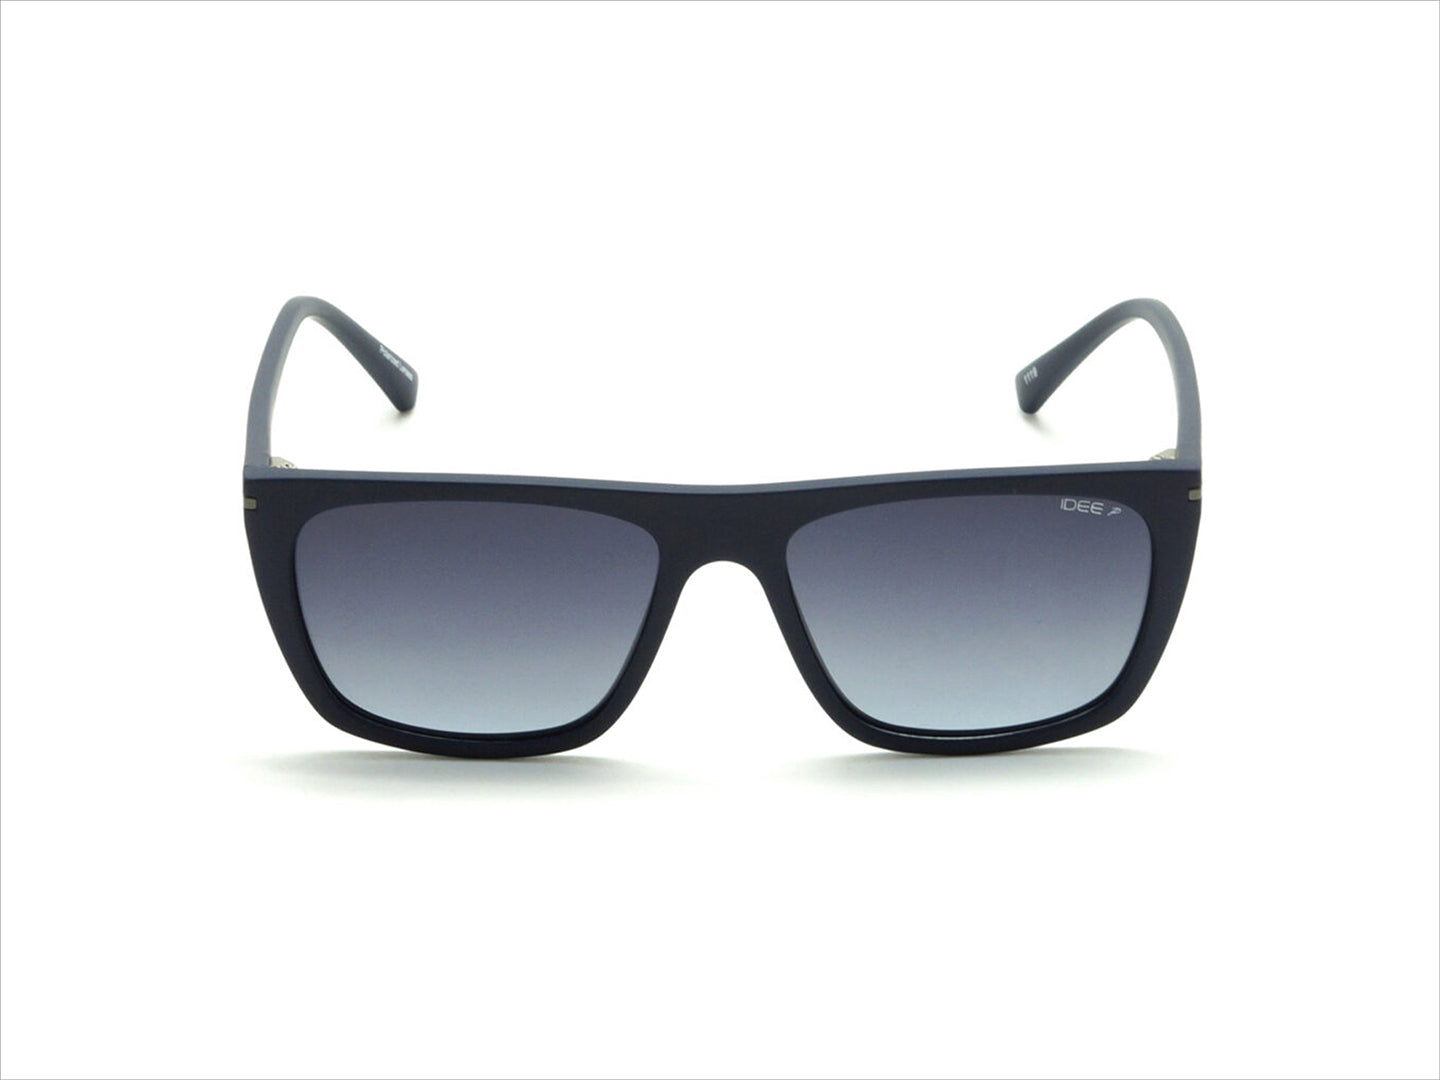 IDEE Sunglasses IDEE-S2606-C4P 55mm Medium Wayfarer Blue Sunglasses